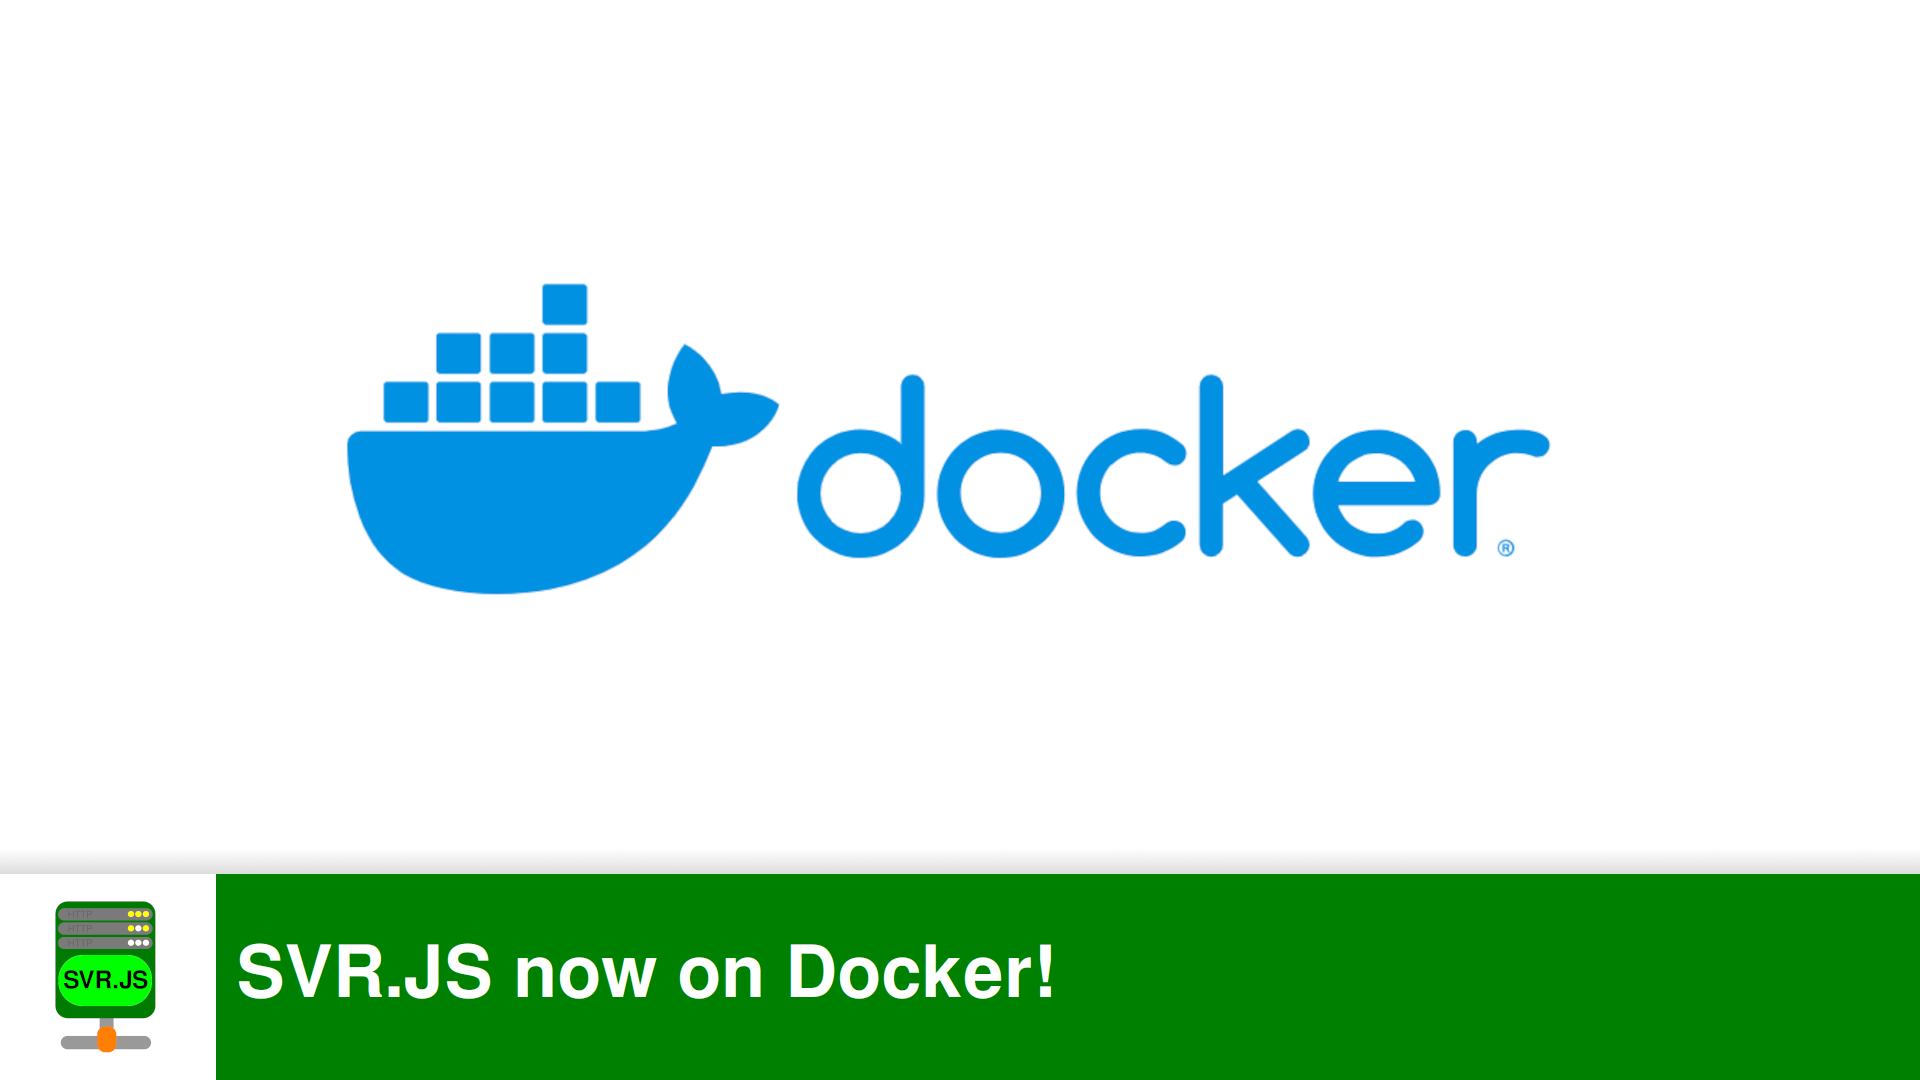 SVR.JS now on Docker!